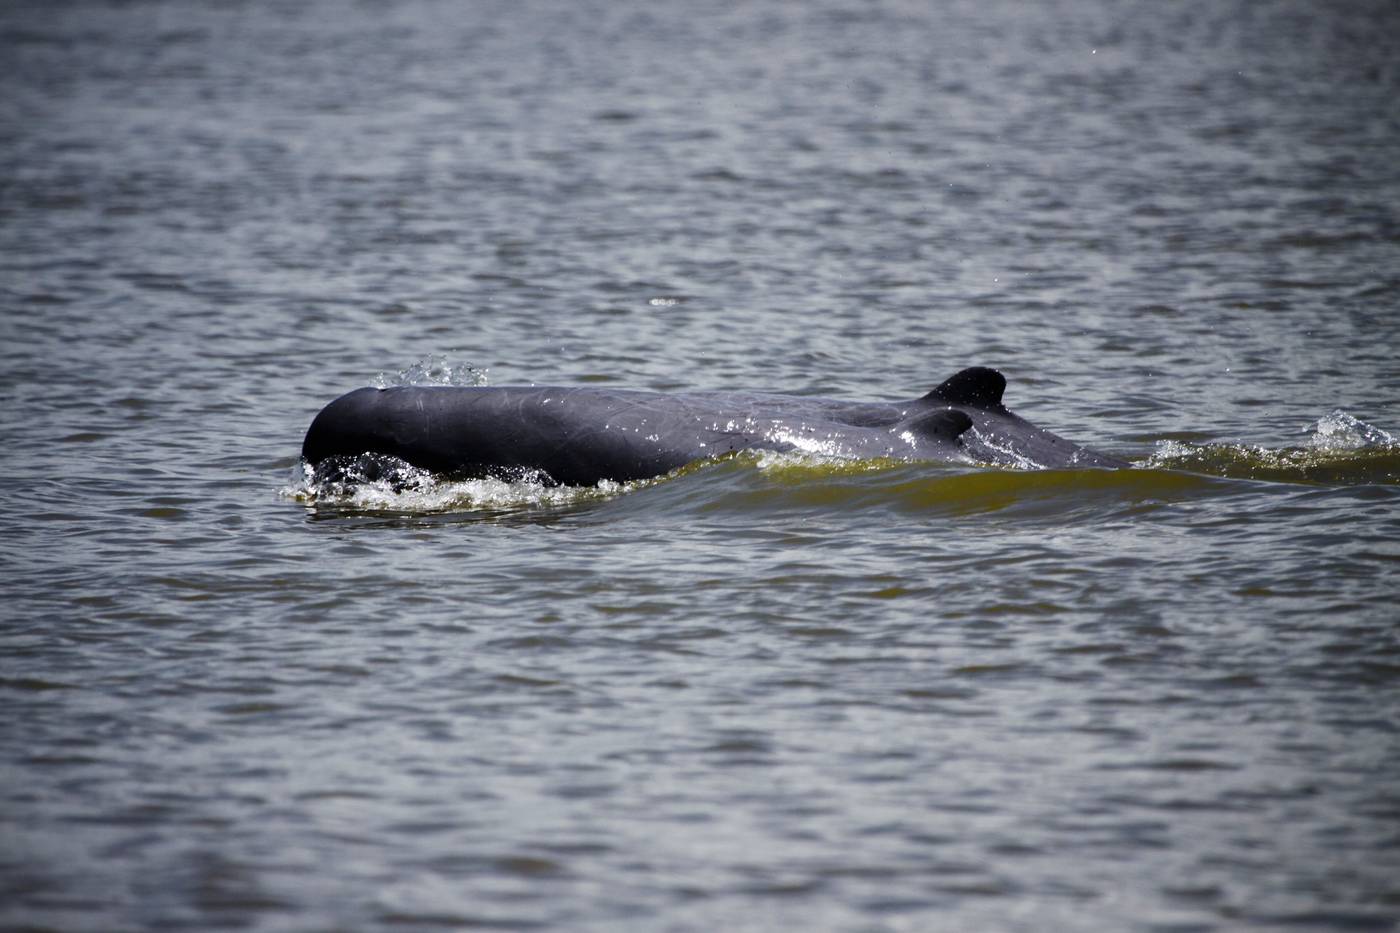 Irrawady dolphins